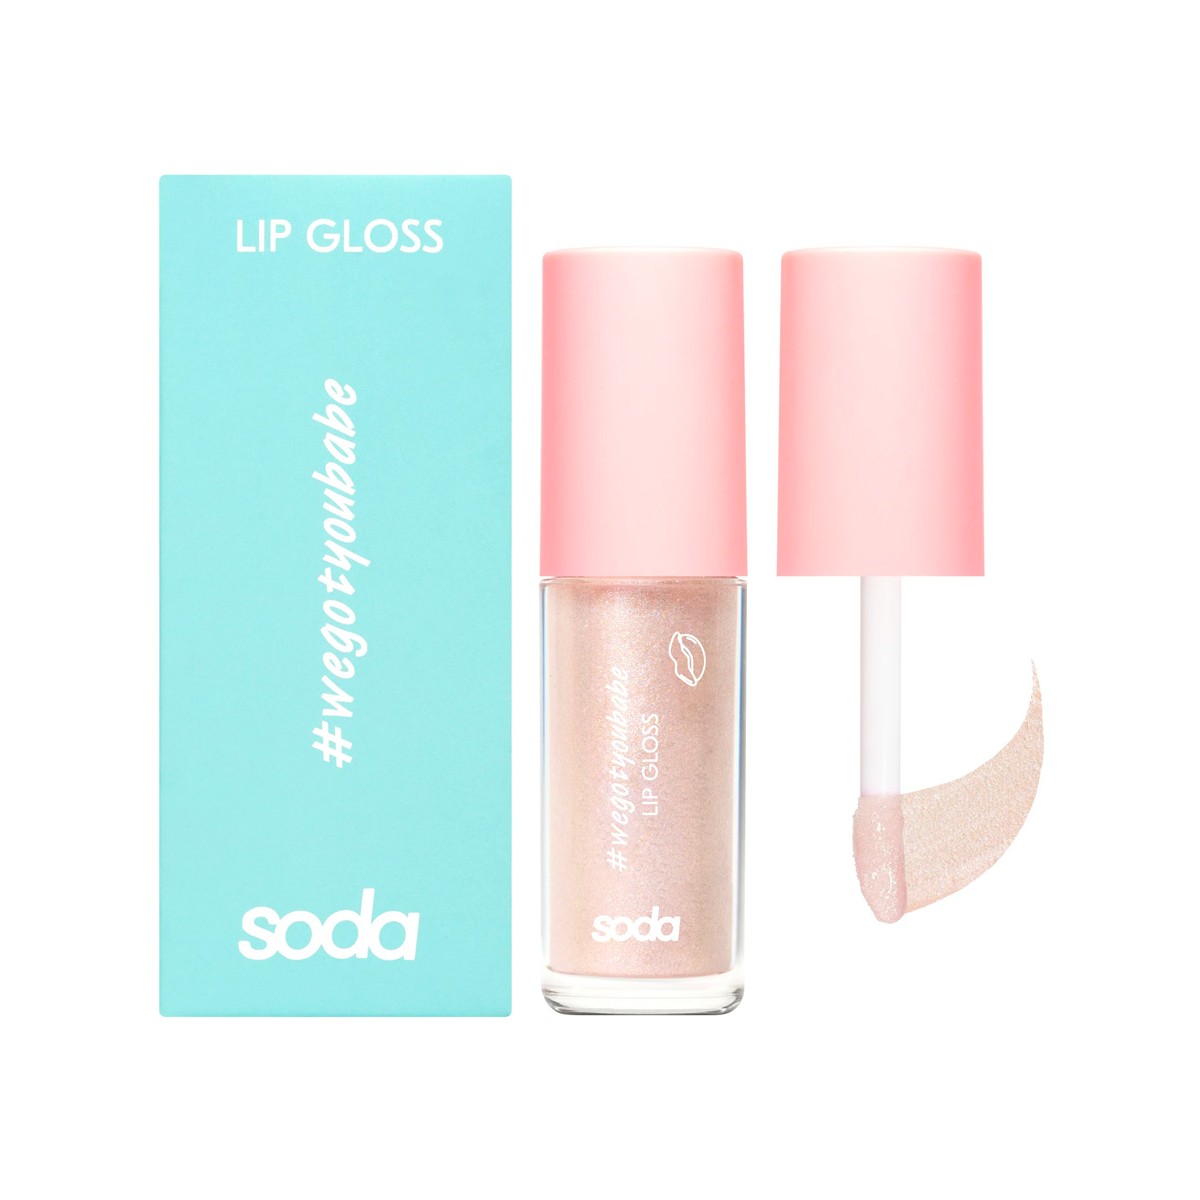 Maquillaje Vegano al mejor precio: Soda Glitter Lip Gloss Golden Crown 101 de Soda Makeup en Skin Thinks - 